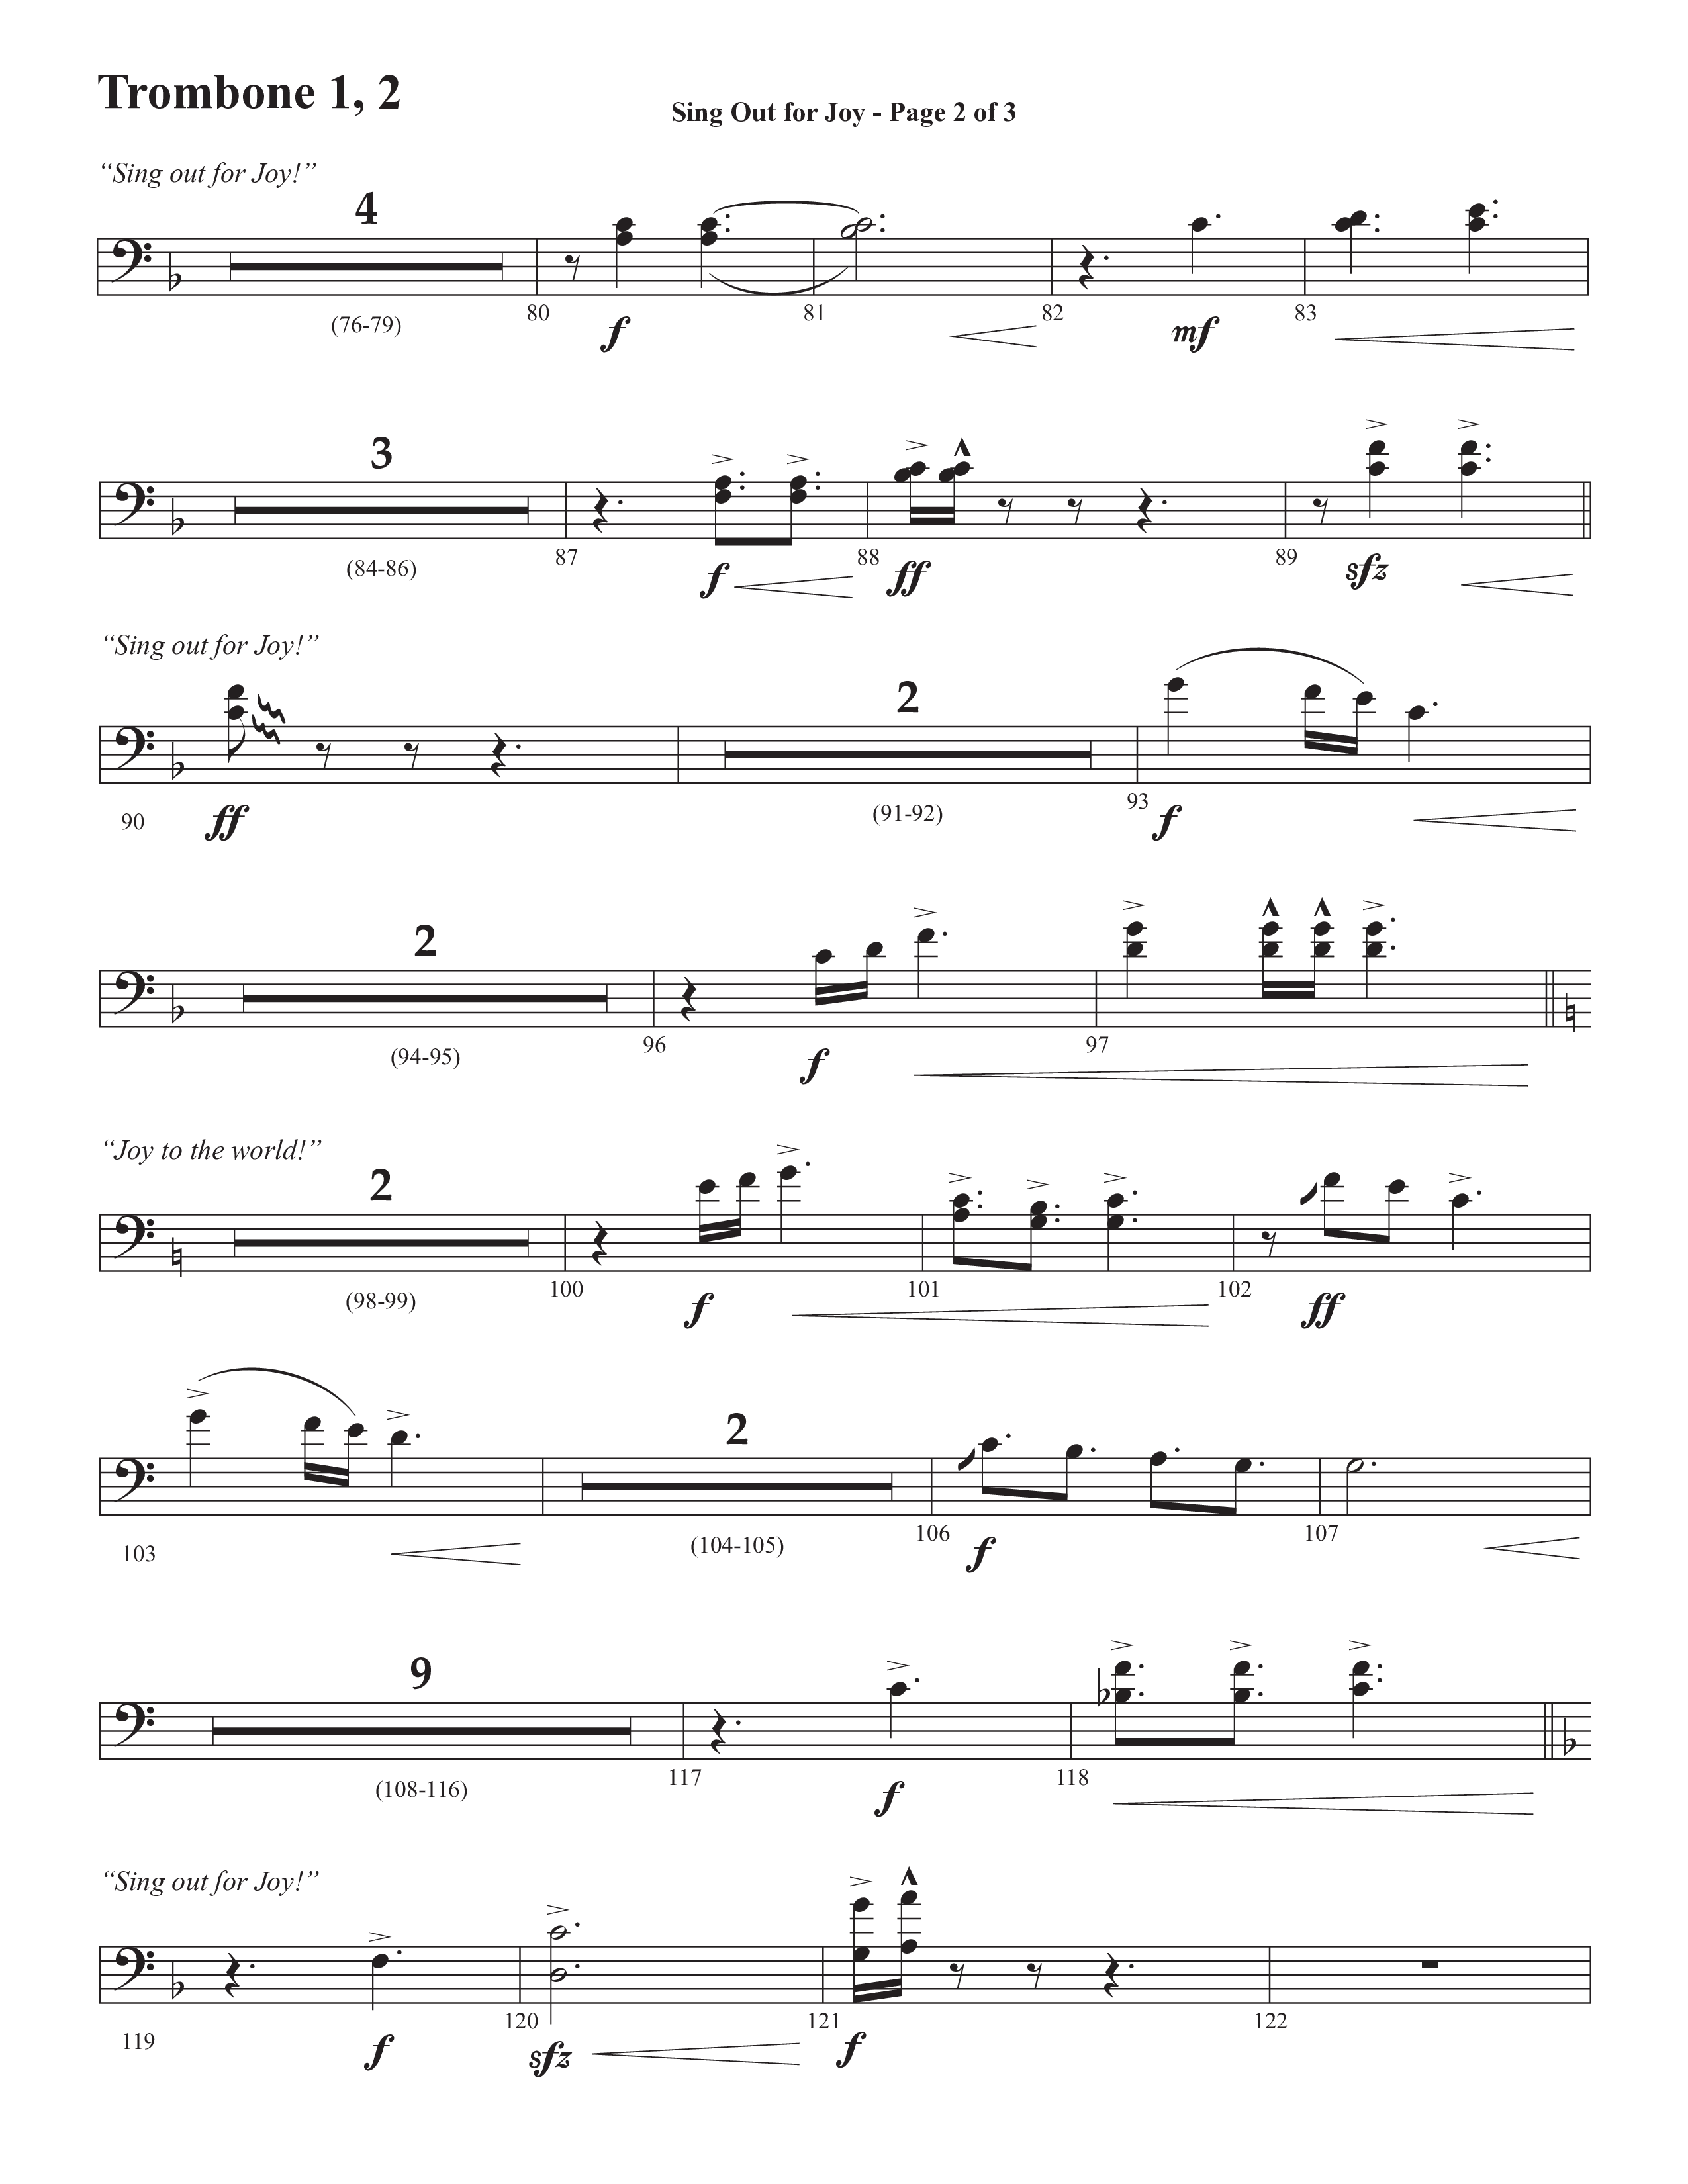 Sing Out For Joy (Choral Anthem SATB) Trombone 1/2 (Semsen Music / Arr. John Bolin / Orch. Cliff Duren)